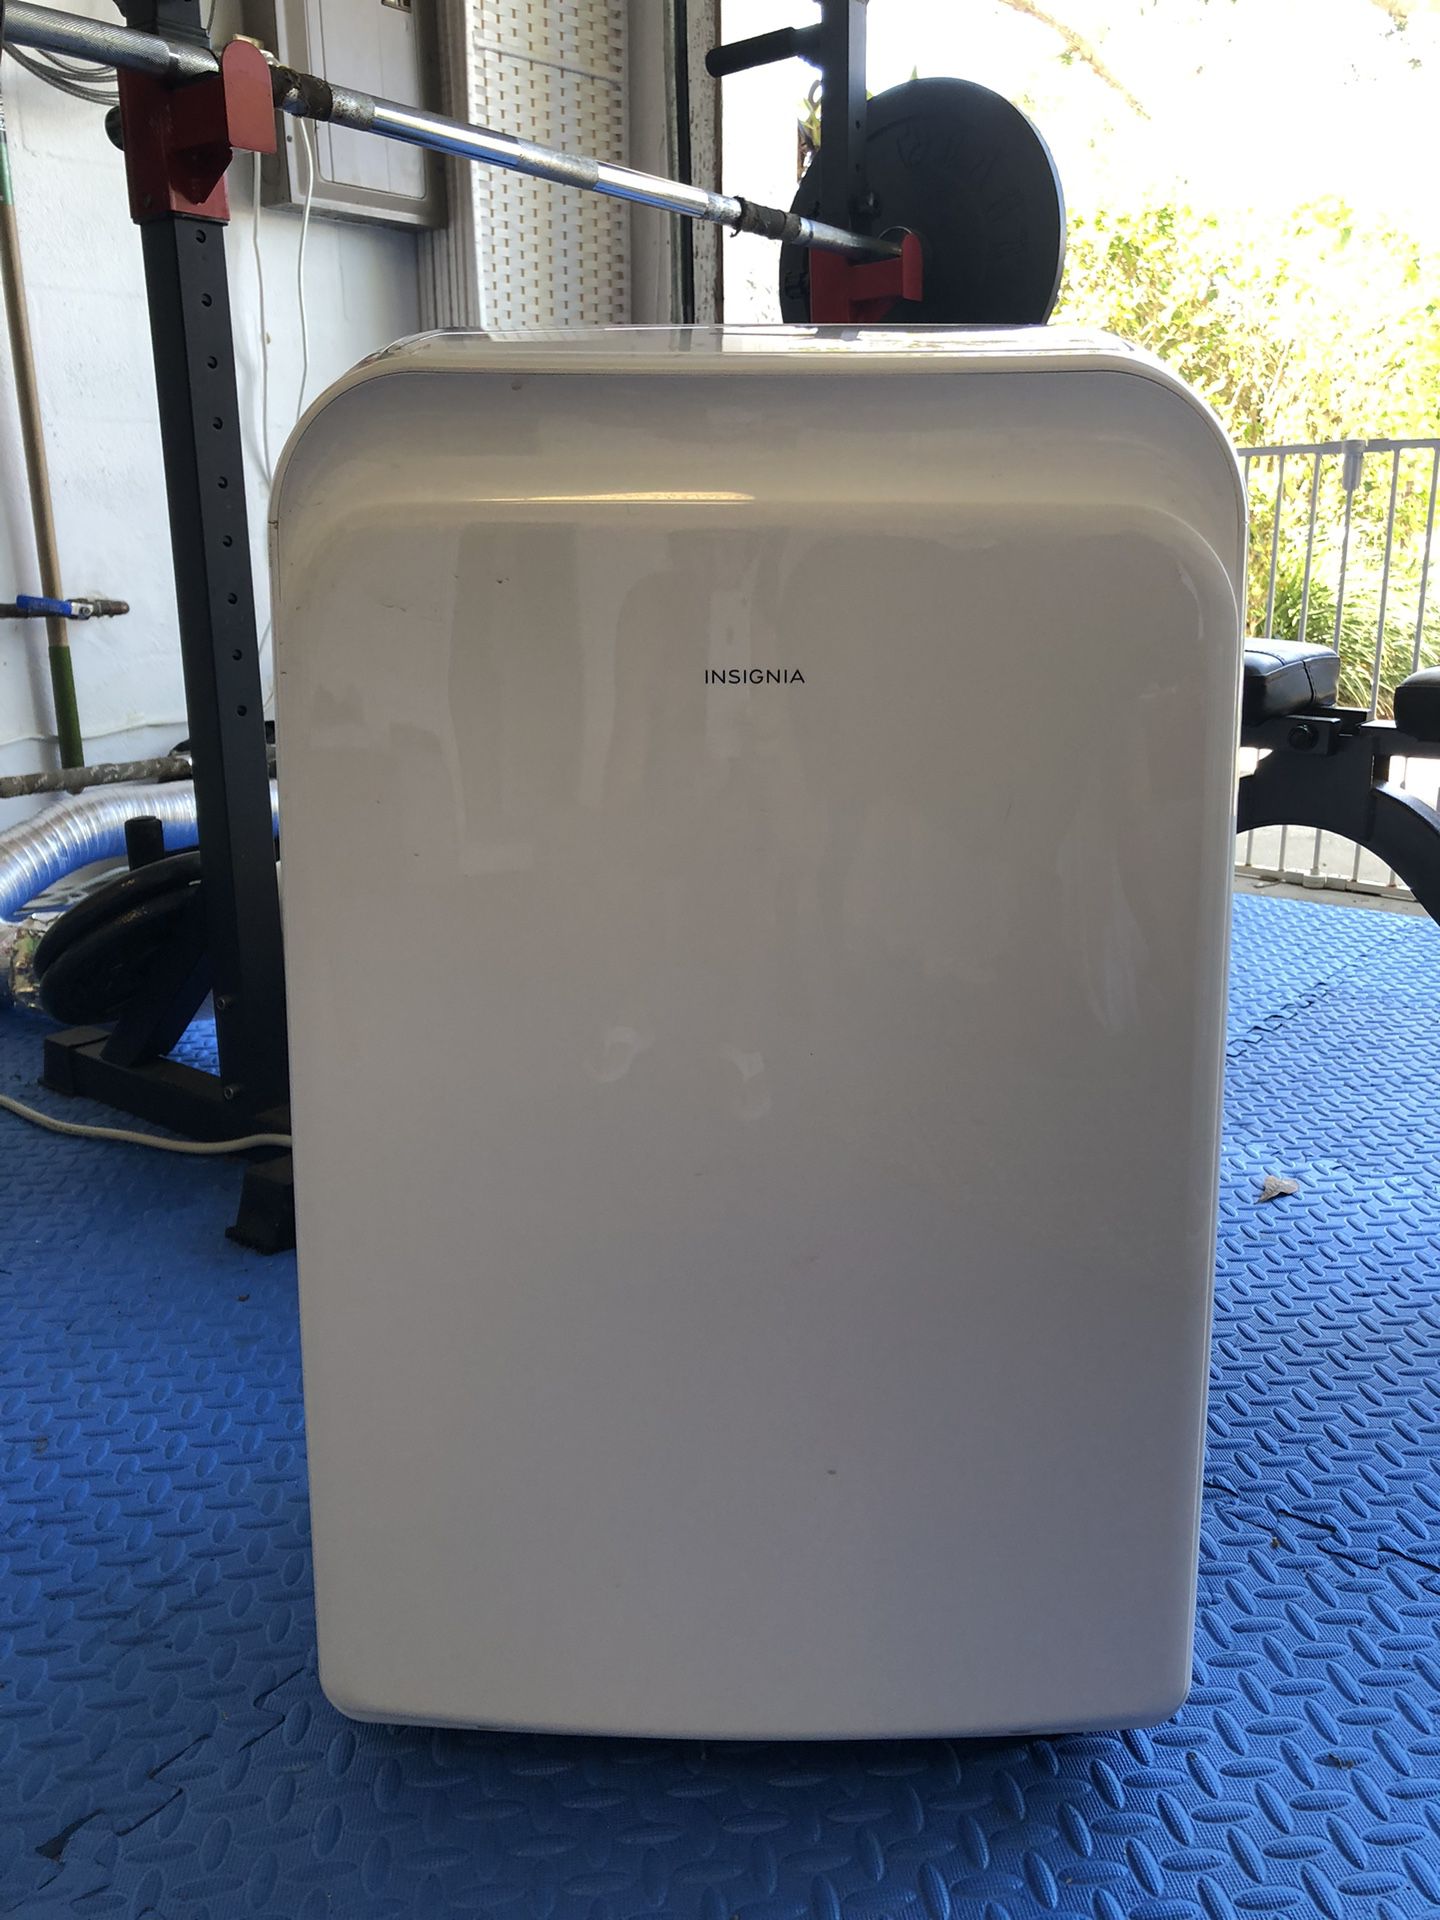 Insignia™ - 350 Sq. Ft. Portable Air Conditioner - White